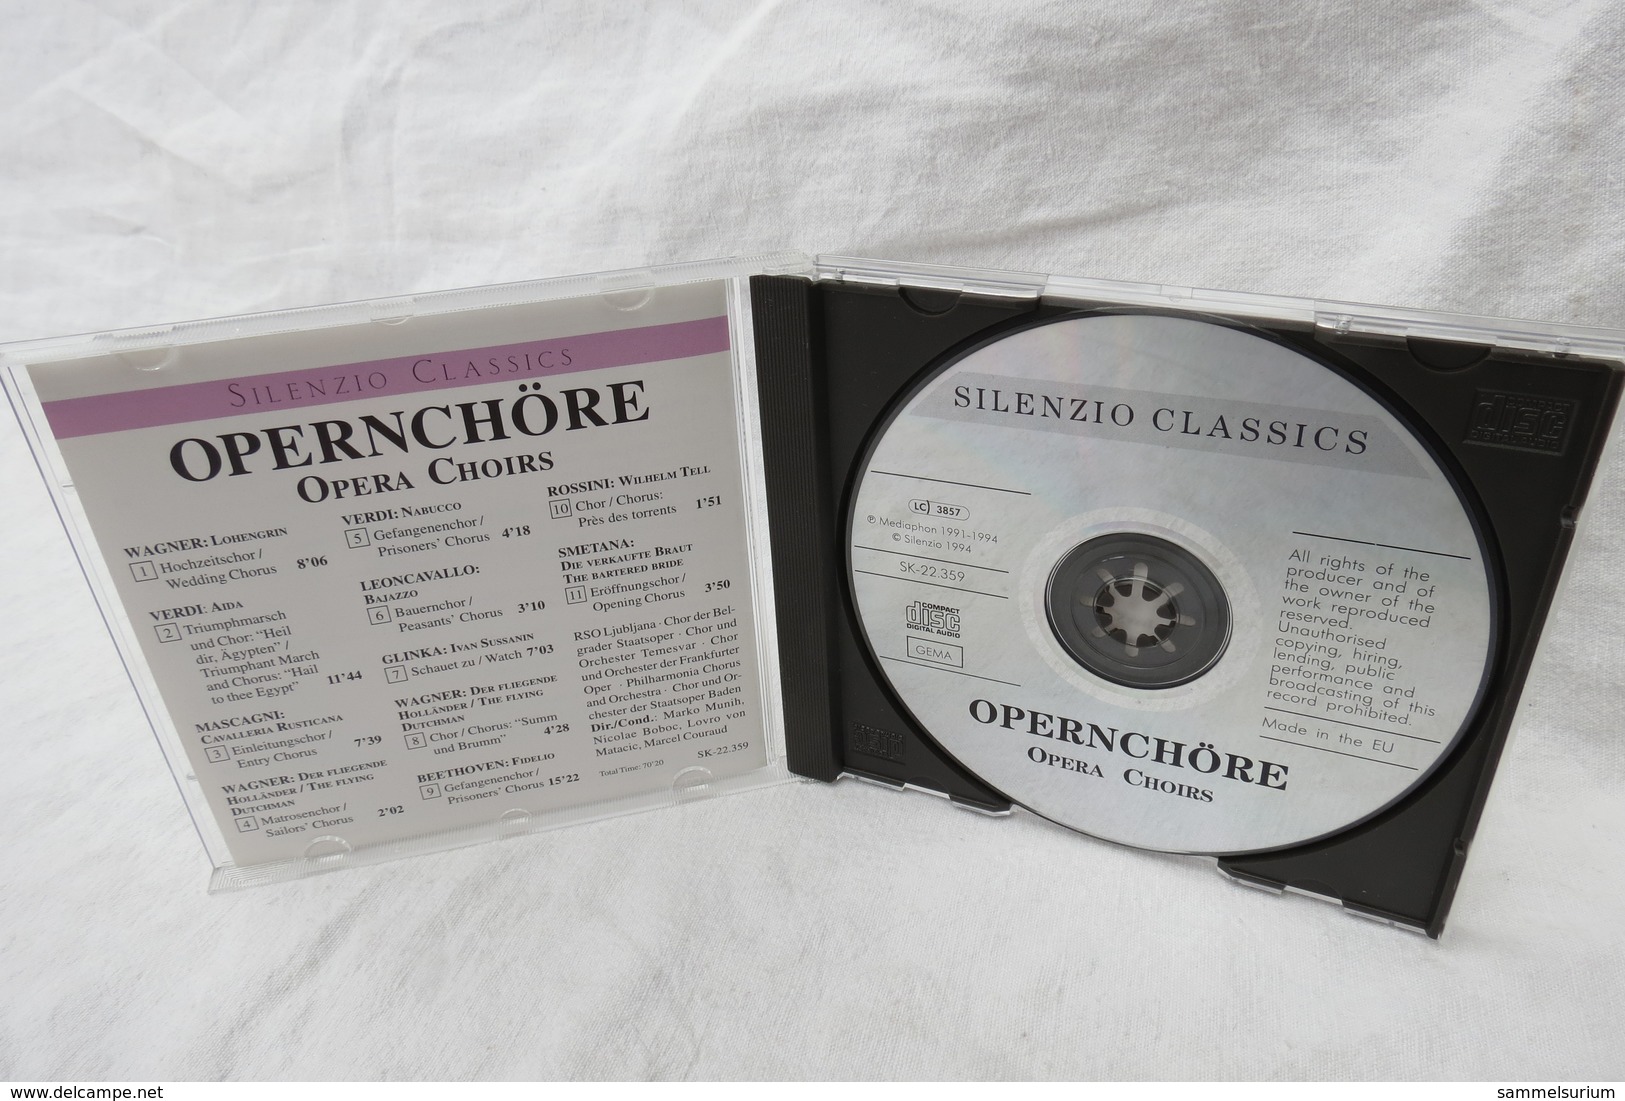 CD "Silenzio Classics" Opernchöre - Opera